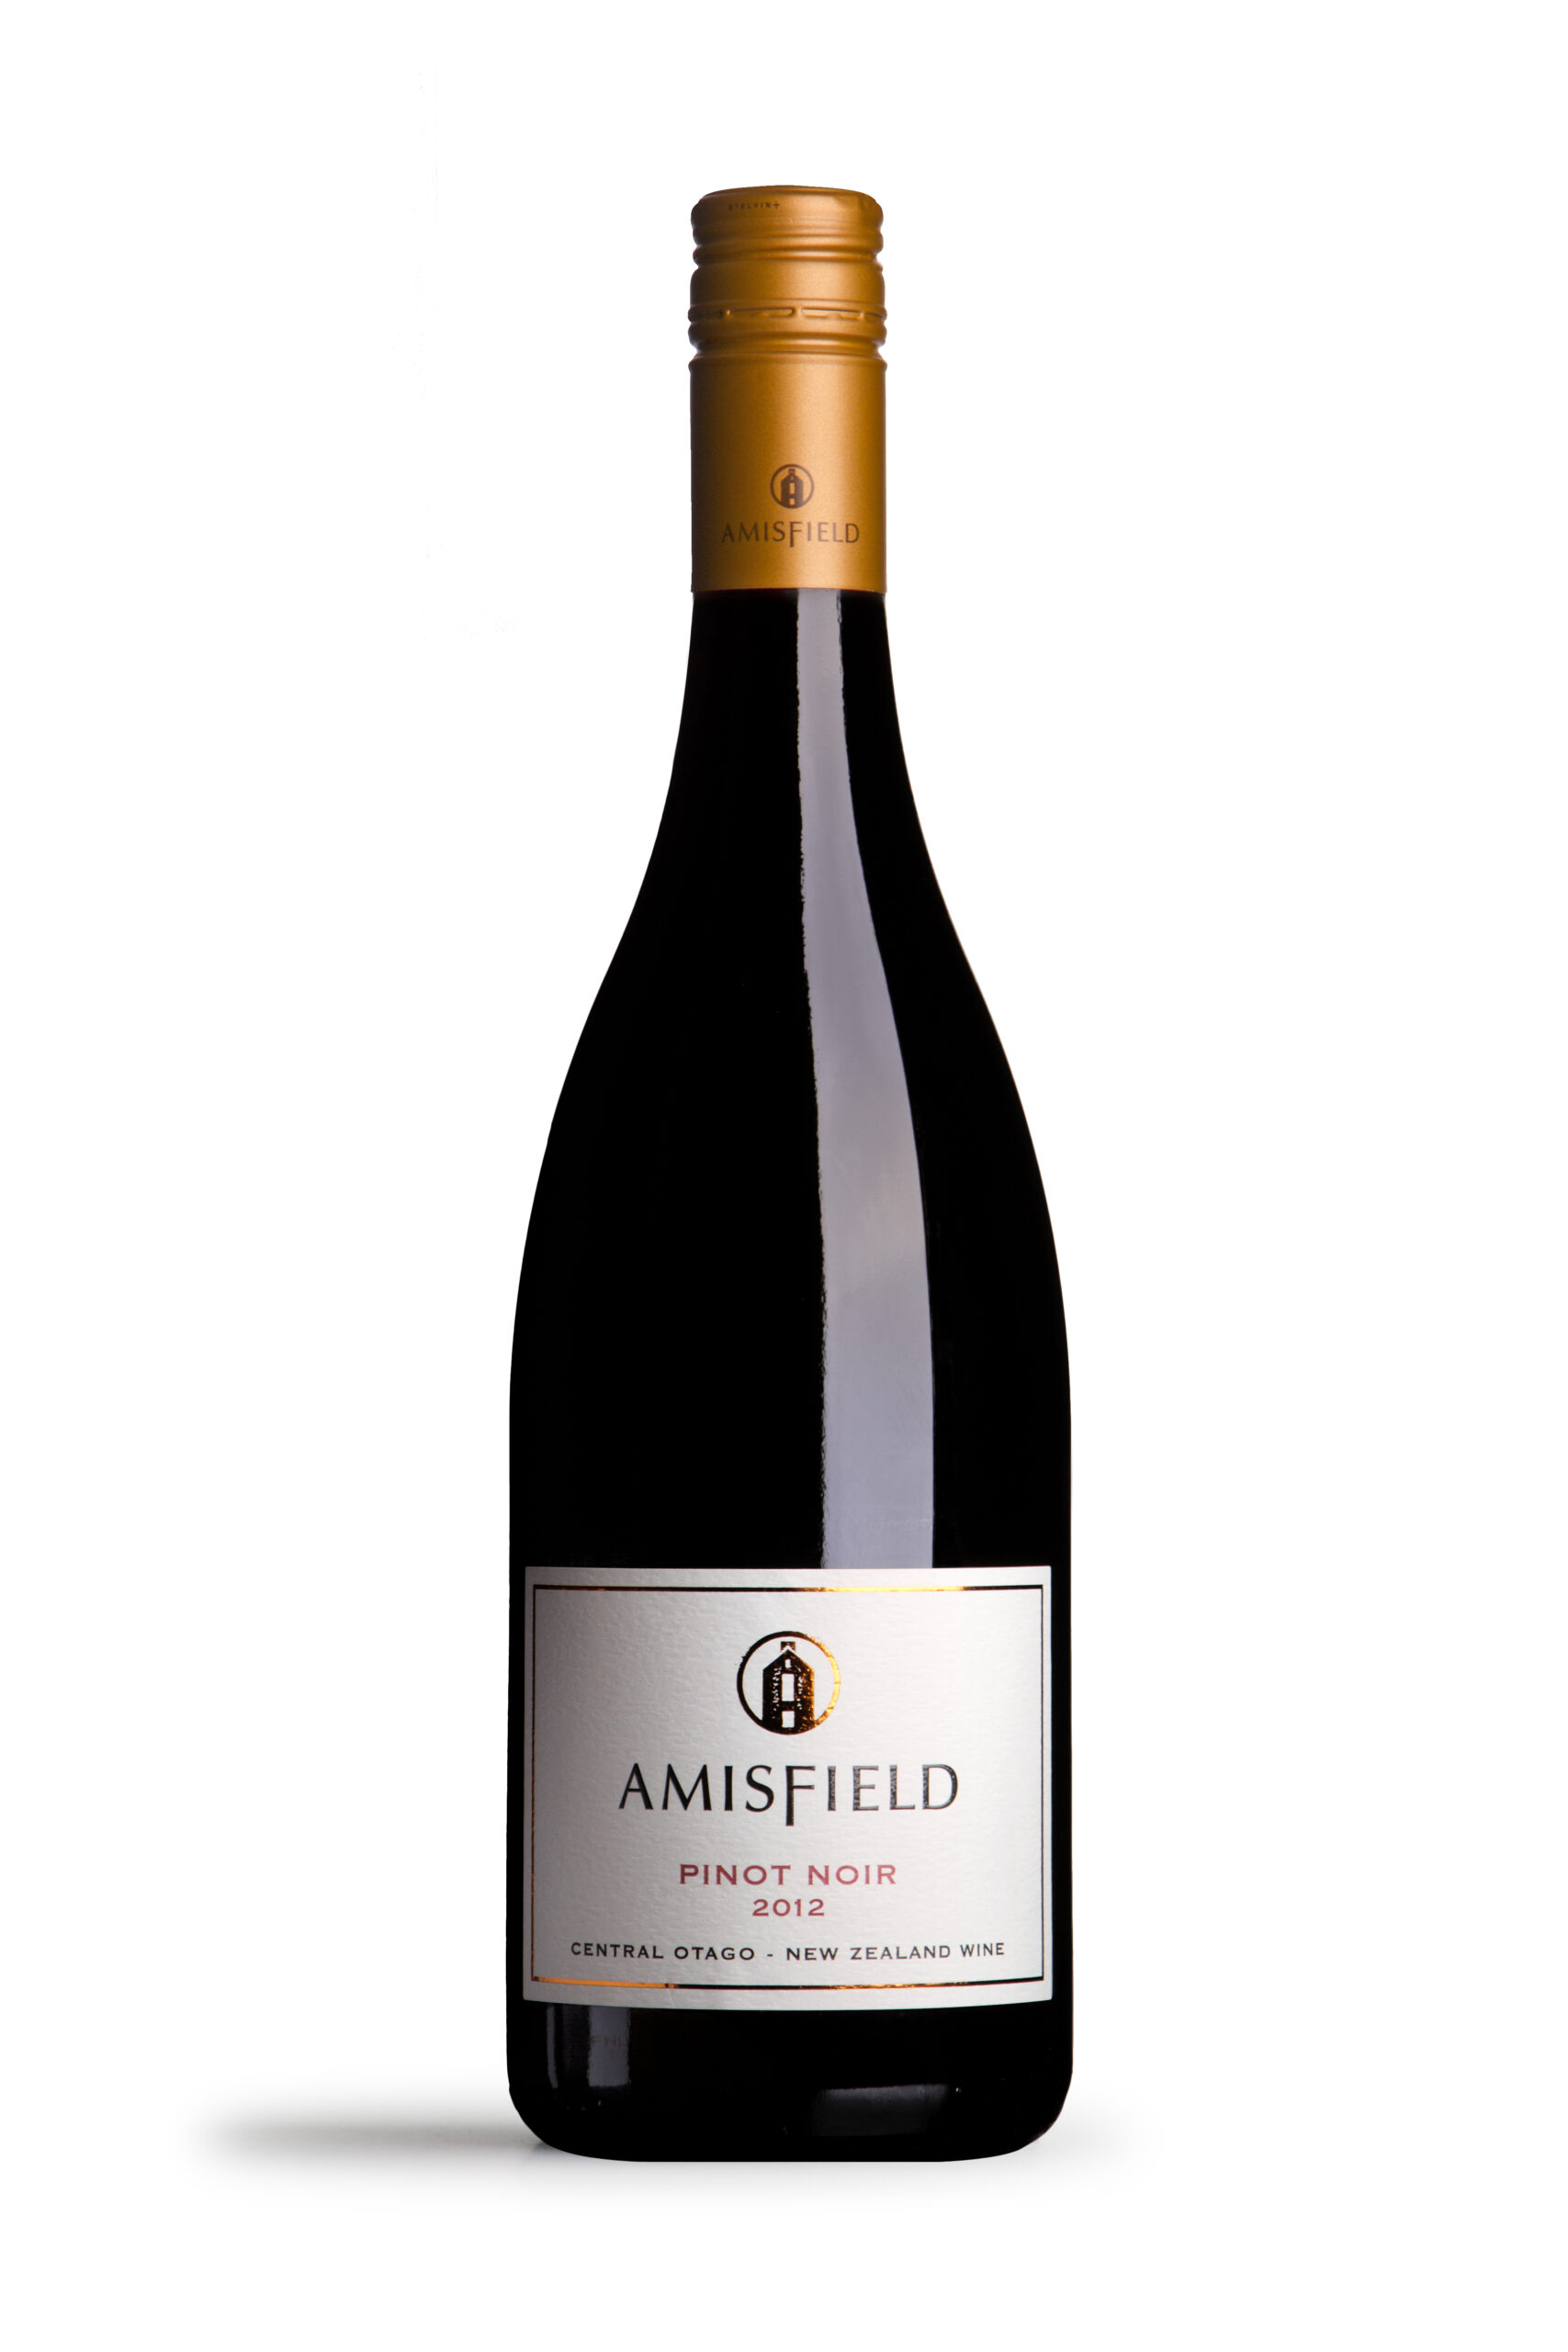 Amisfield Pinot Noir 2012